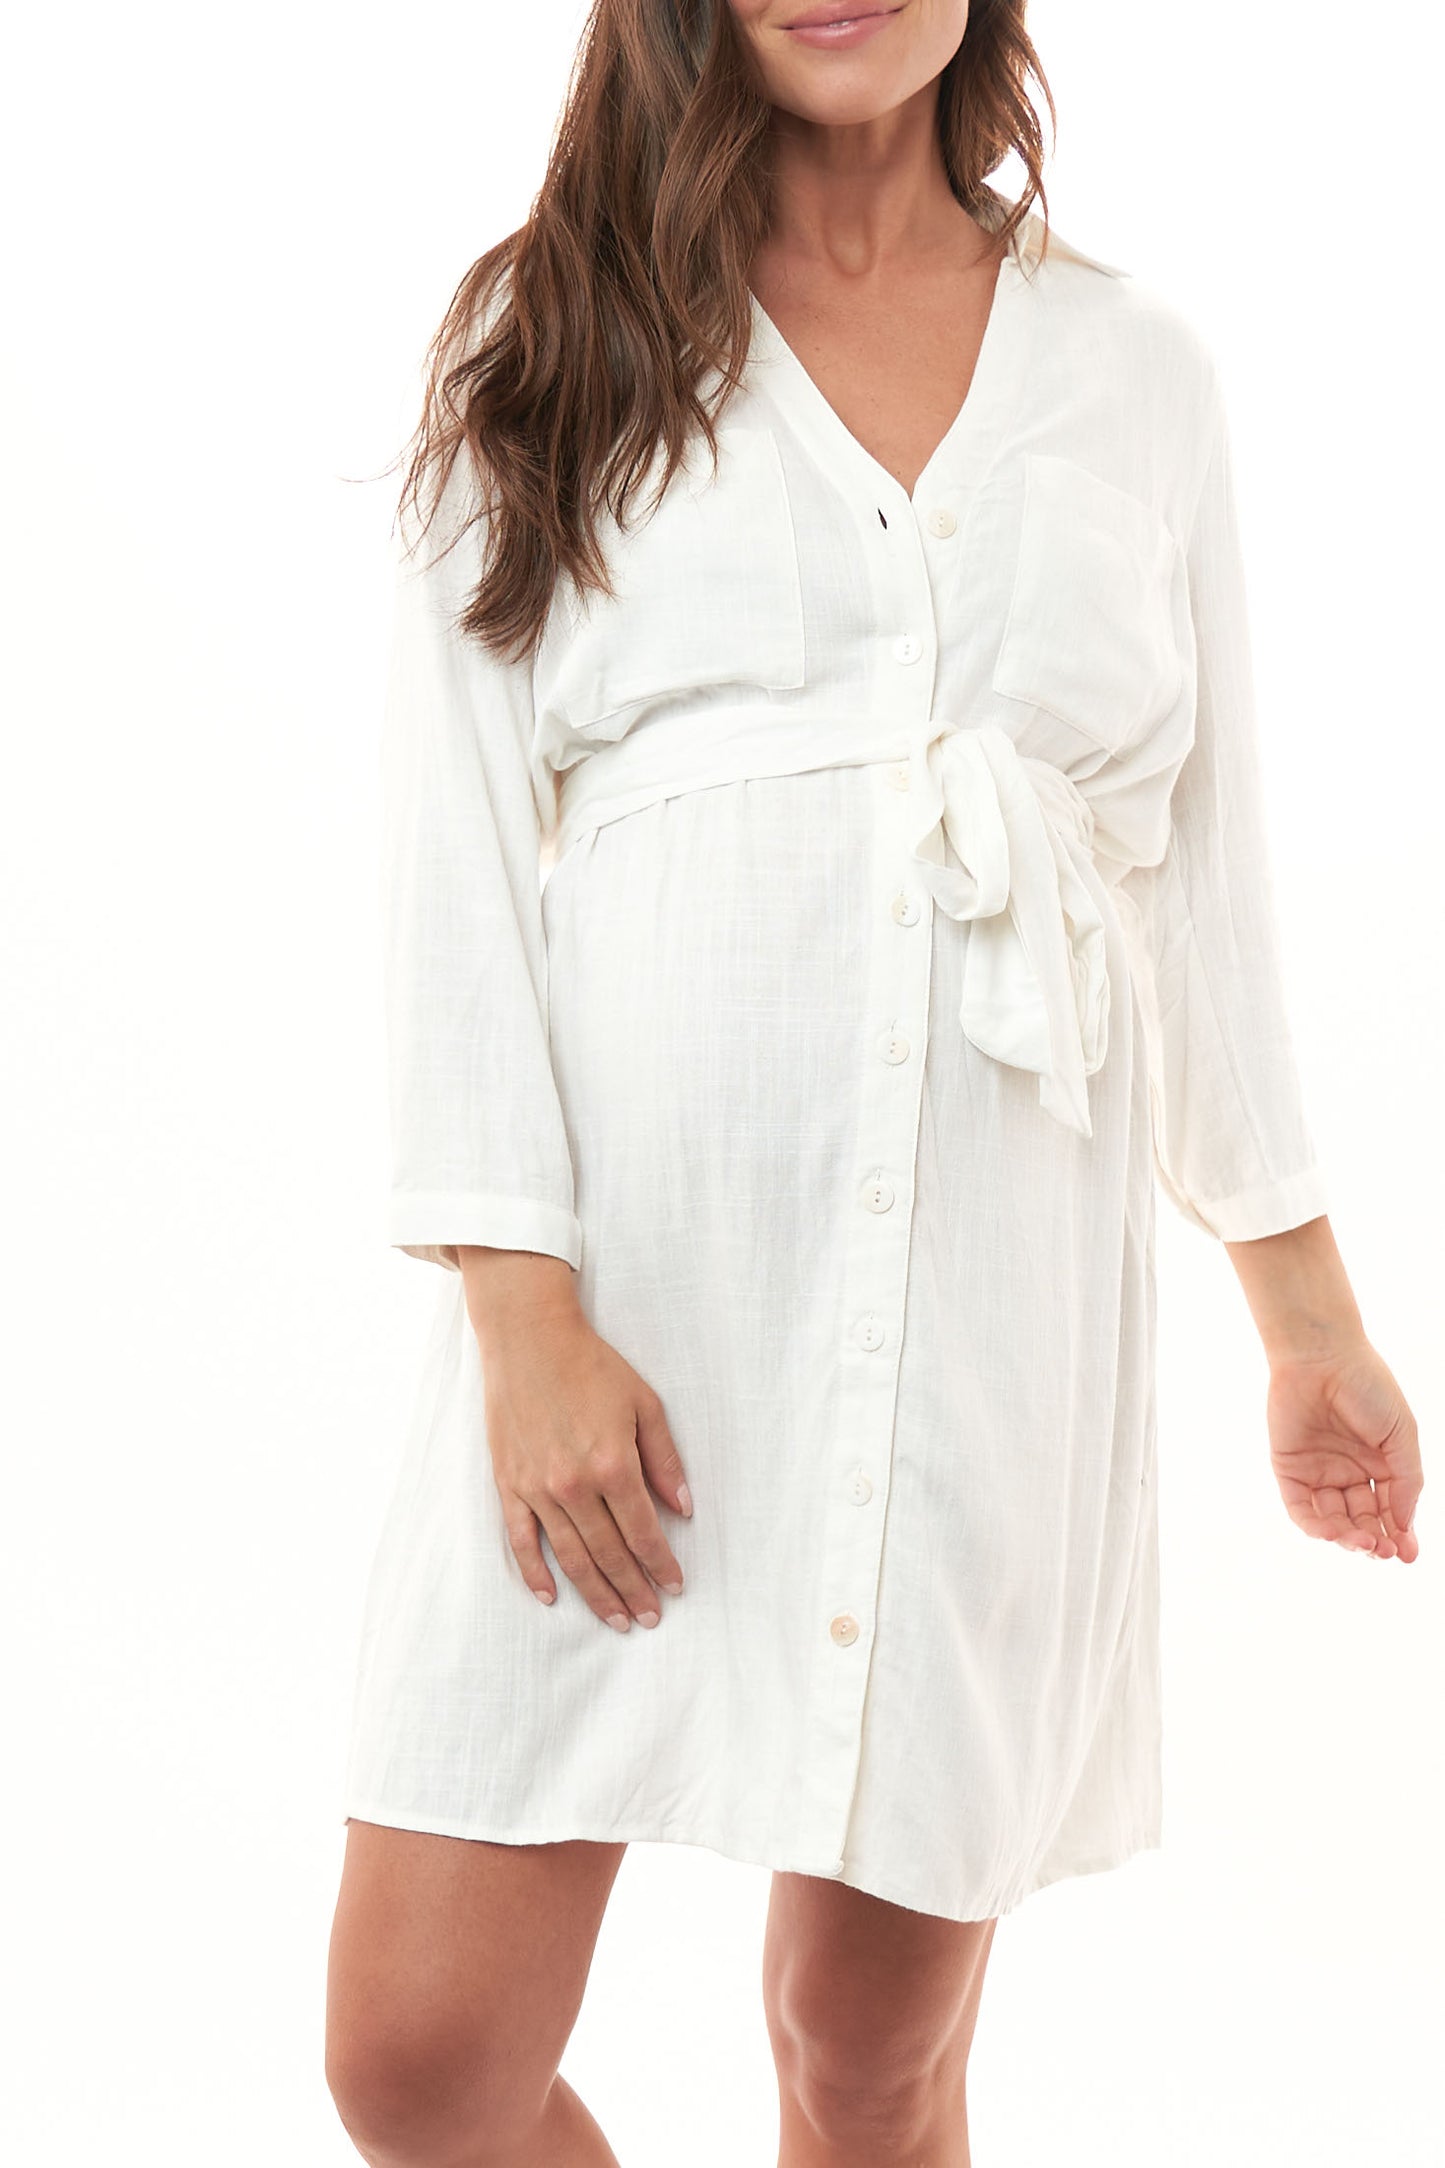 White Maternity Dress - 2